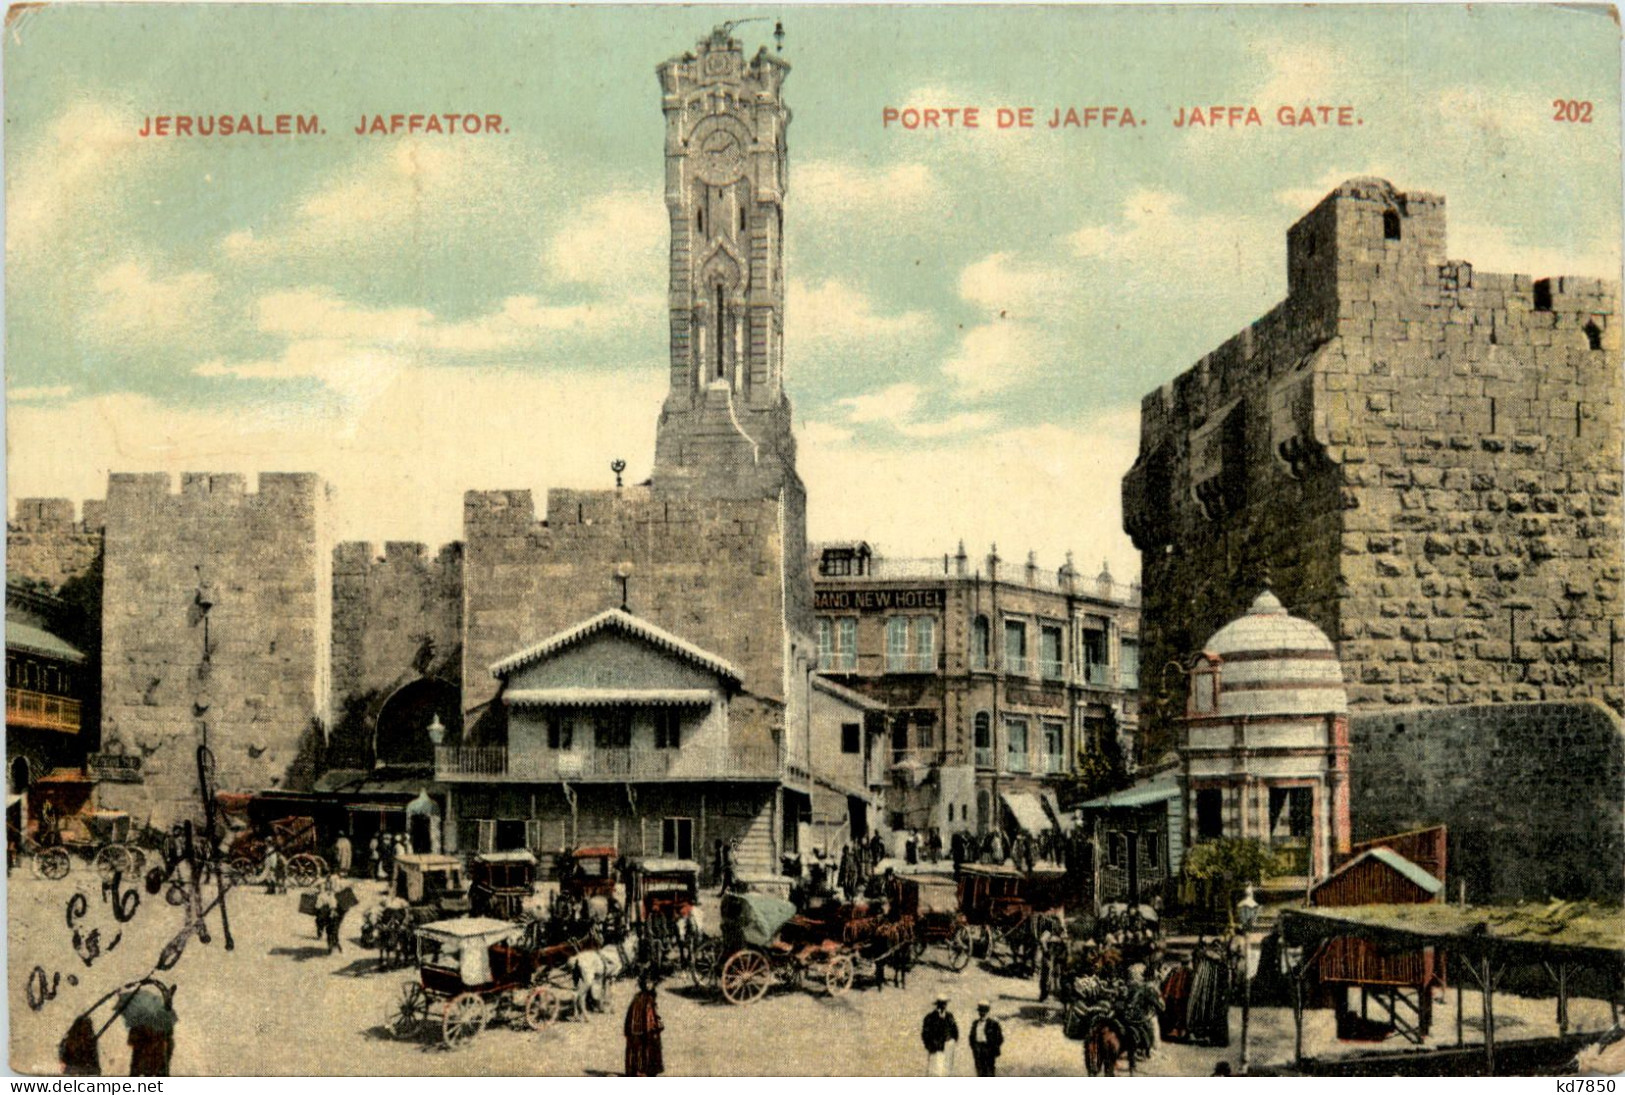 Jerusalem - Jaffator - Palestine